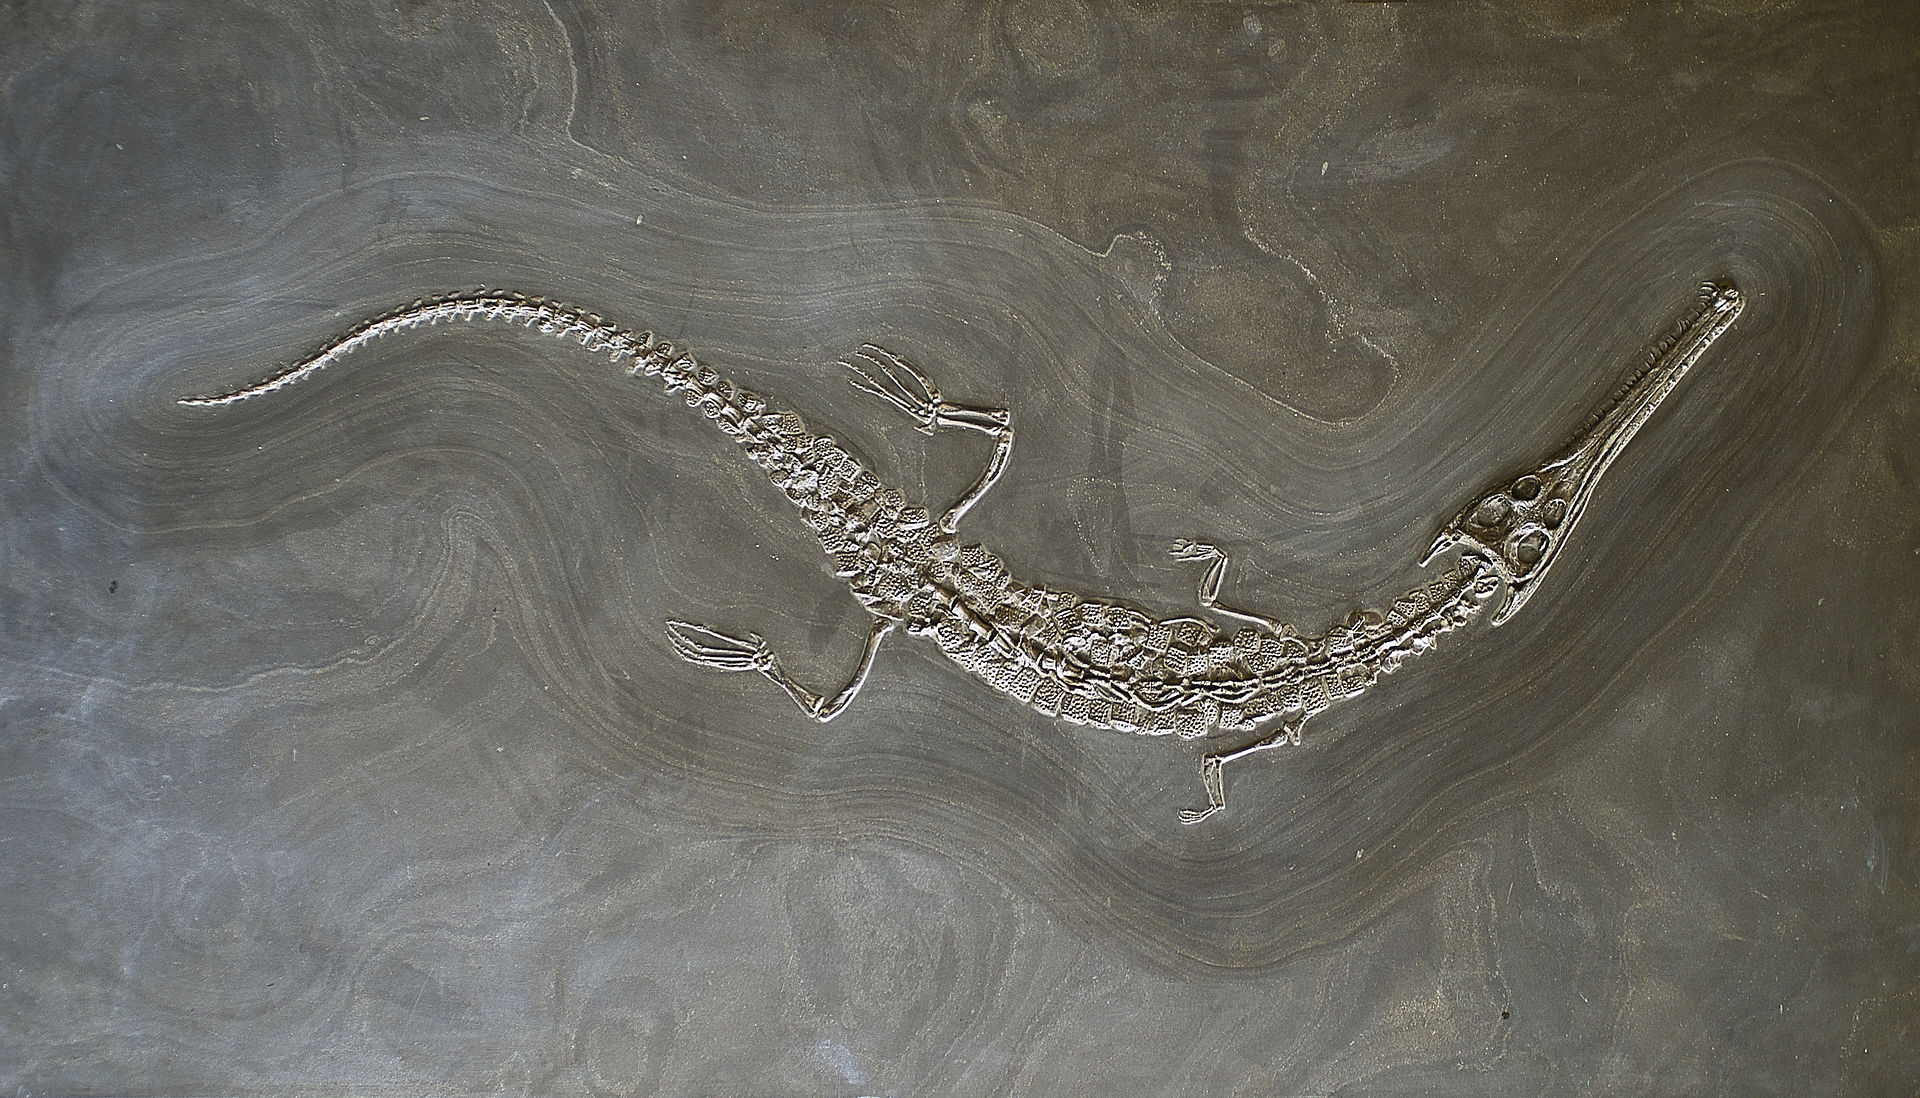 A Steneisaurus, similar to the giant prehistoric crocodile recently renamed for Lemmy Kilmister